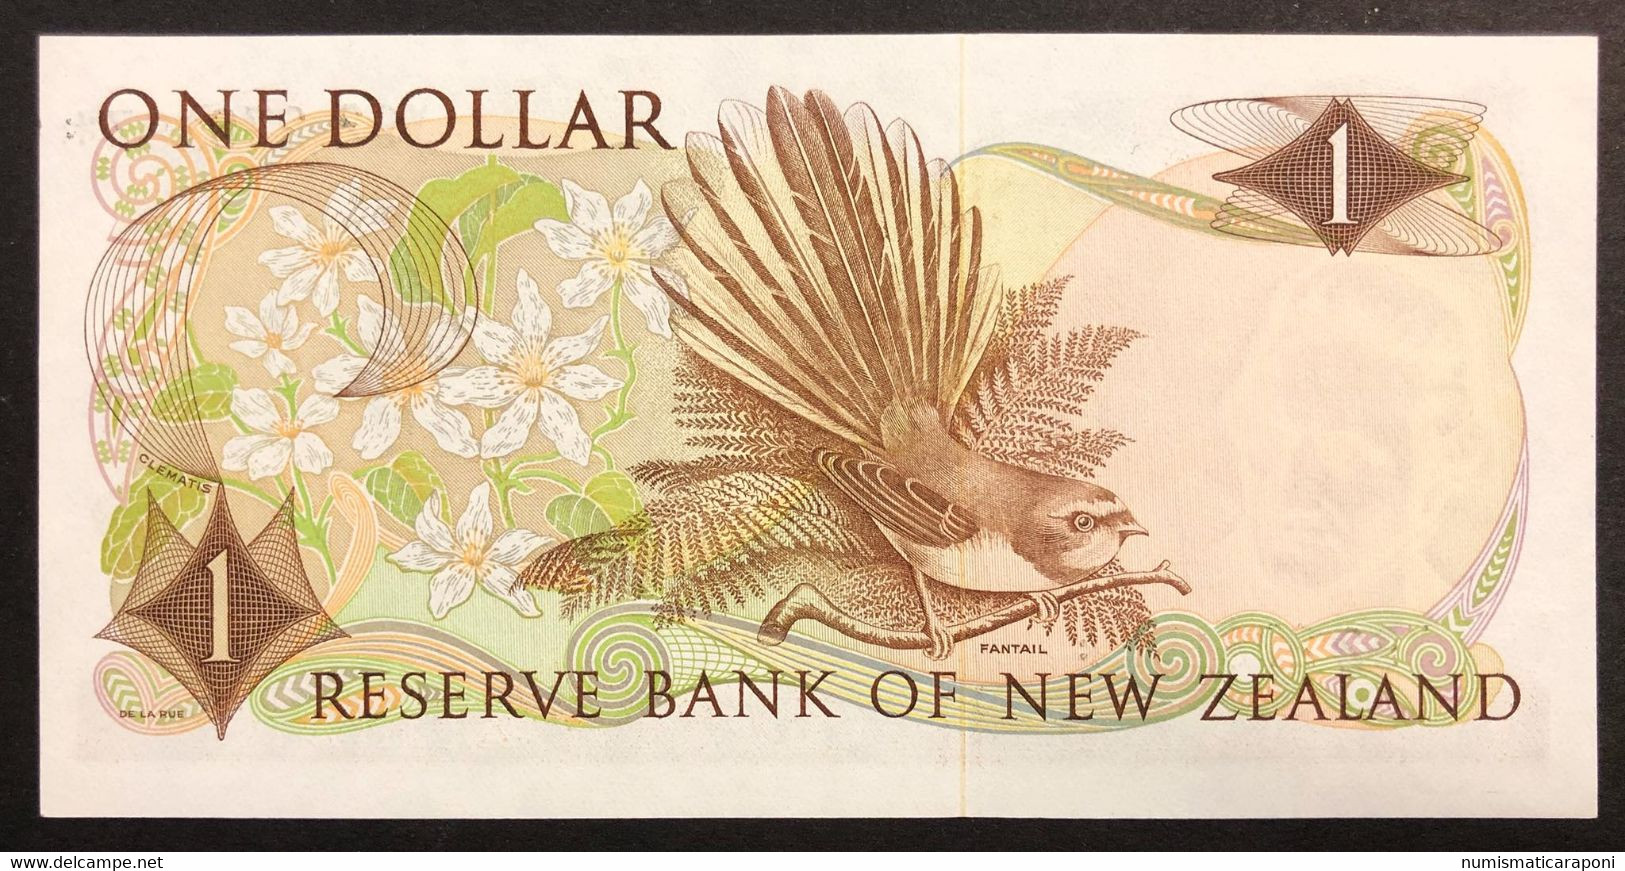 Nuova Zelanda NEW ZEALAND 1 Dollar  (1977-81) $ STAR REPLACEMENT PICK#163d  LOTTO 3706 - Neuseeland